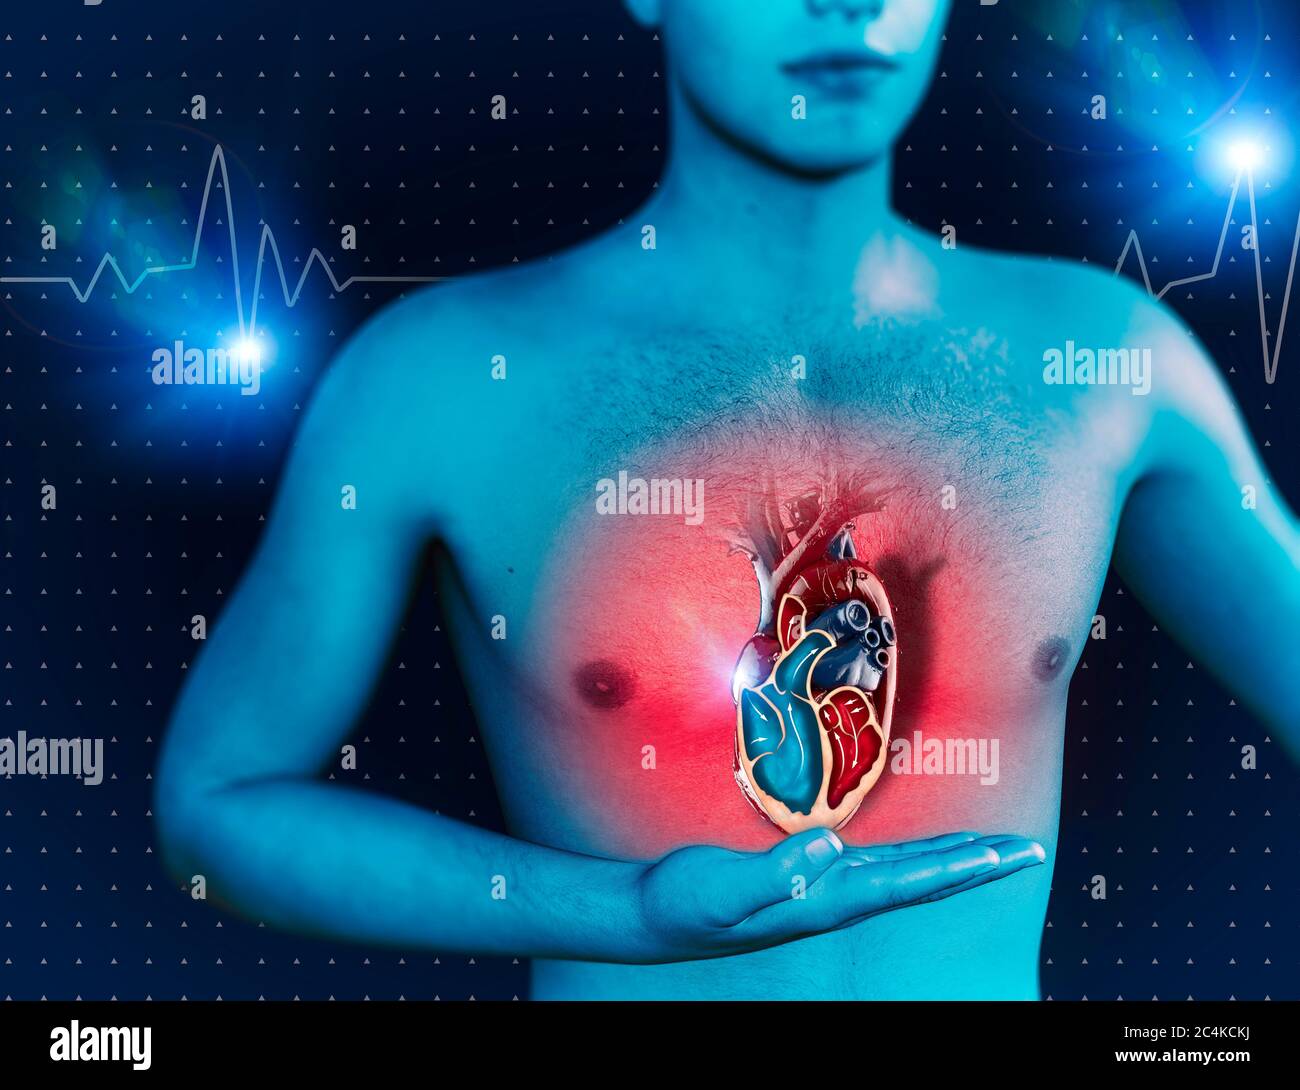 Uomo e cuore, anatomia umana, battito cardiaco e attacco. Esame medico cardiaco, funzionamento cardiaco. rendering 3d Foto Stock